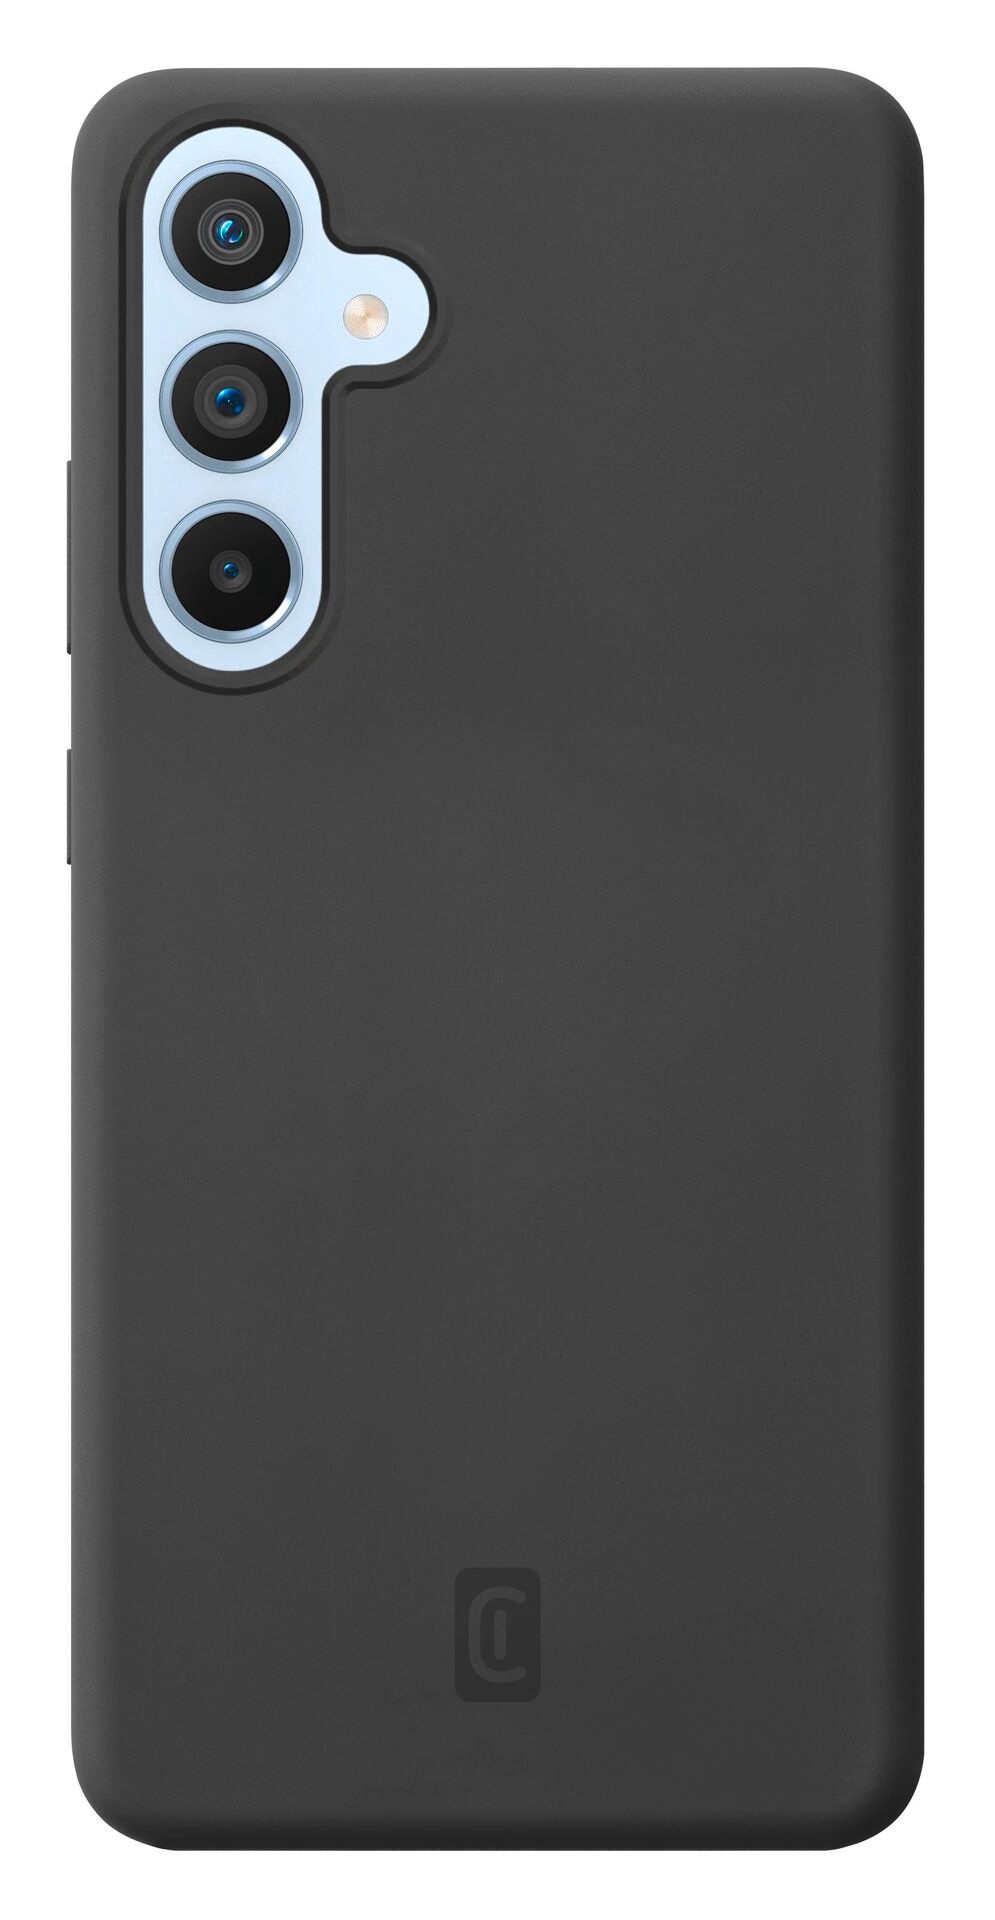 Cellularline Backcover »Sensation Case Samsung Galaxy A54 5G«